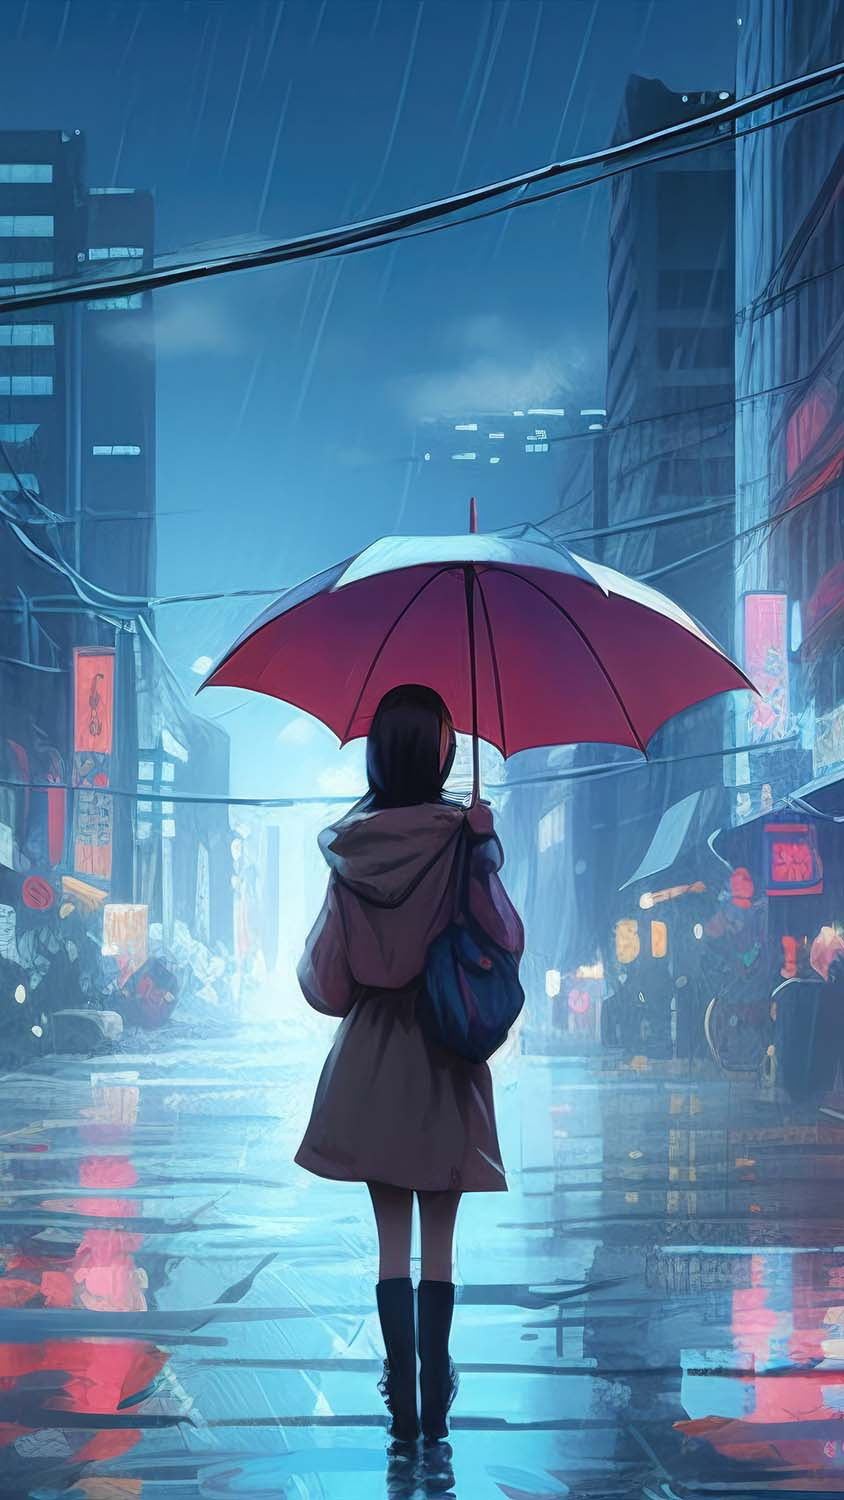 Anime Girl Walking In Rain Umbrella Wallpaper Download | MOONAZ